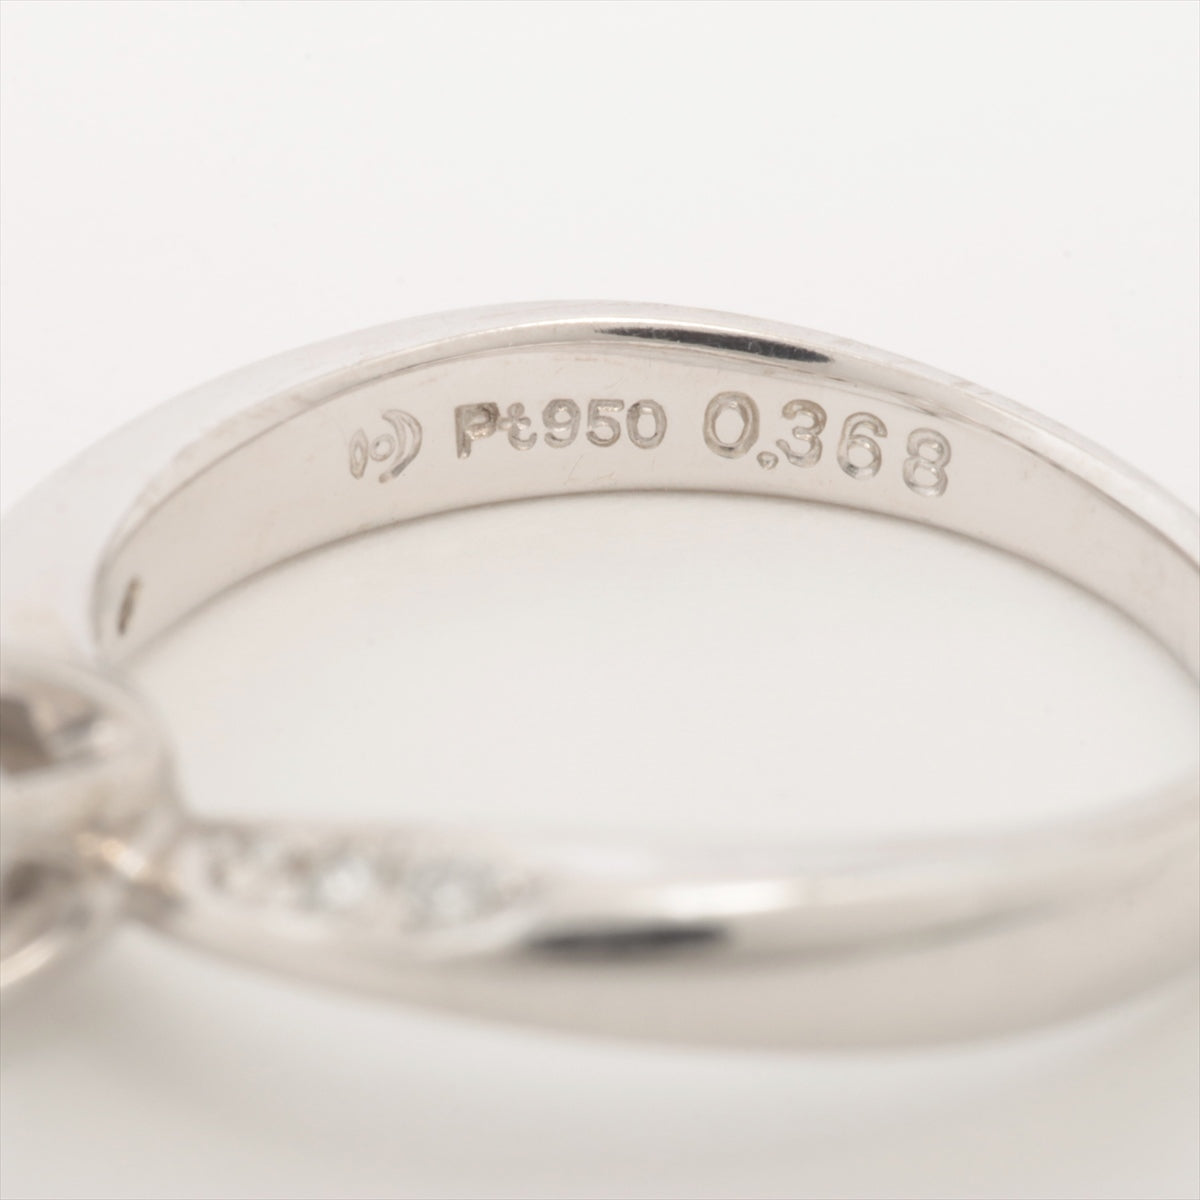 TASAKI Diamond Ring Pt950 3.5g 0.368 0.04